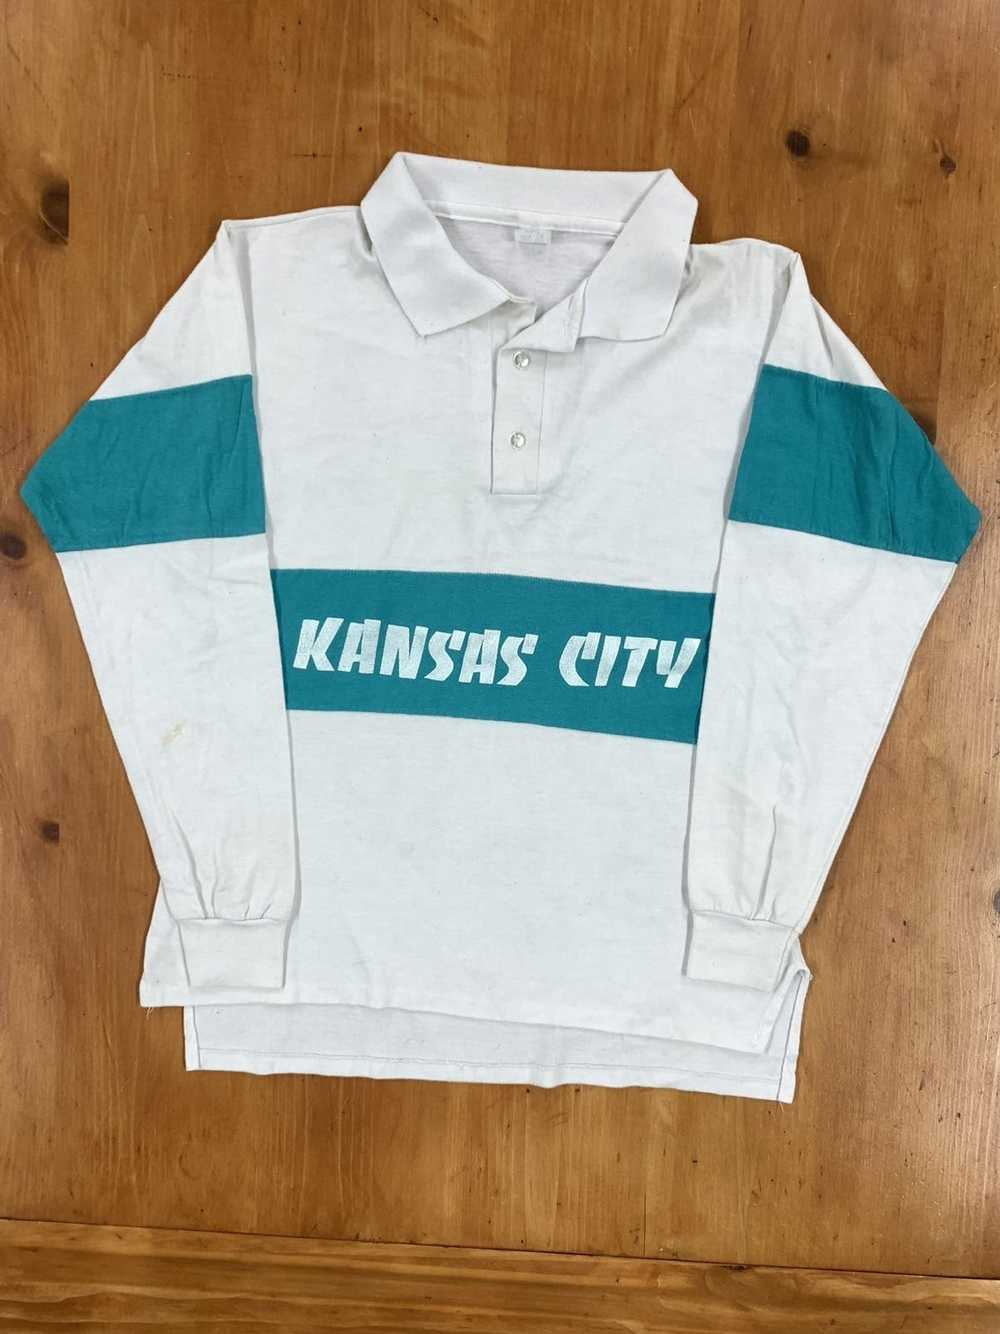 Vintage Vintage 1980s Kansas City Rugby Shirt - image 1